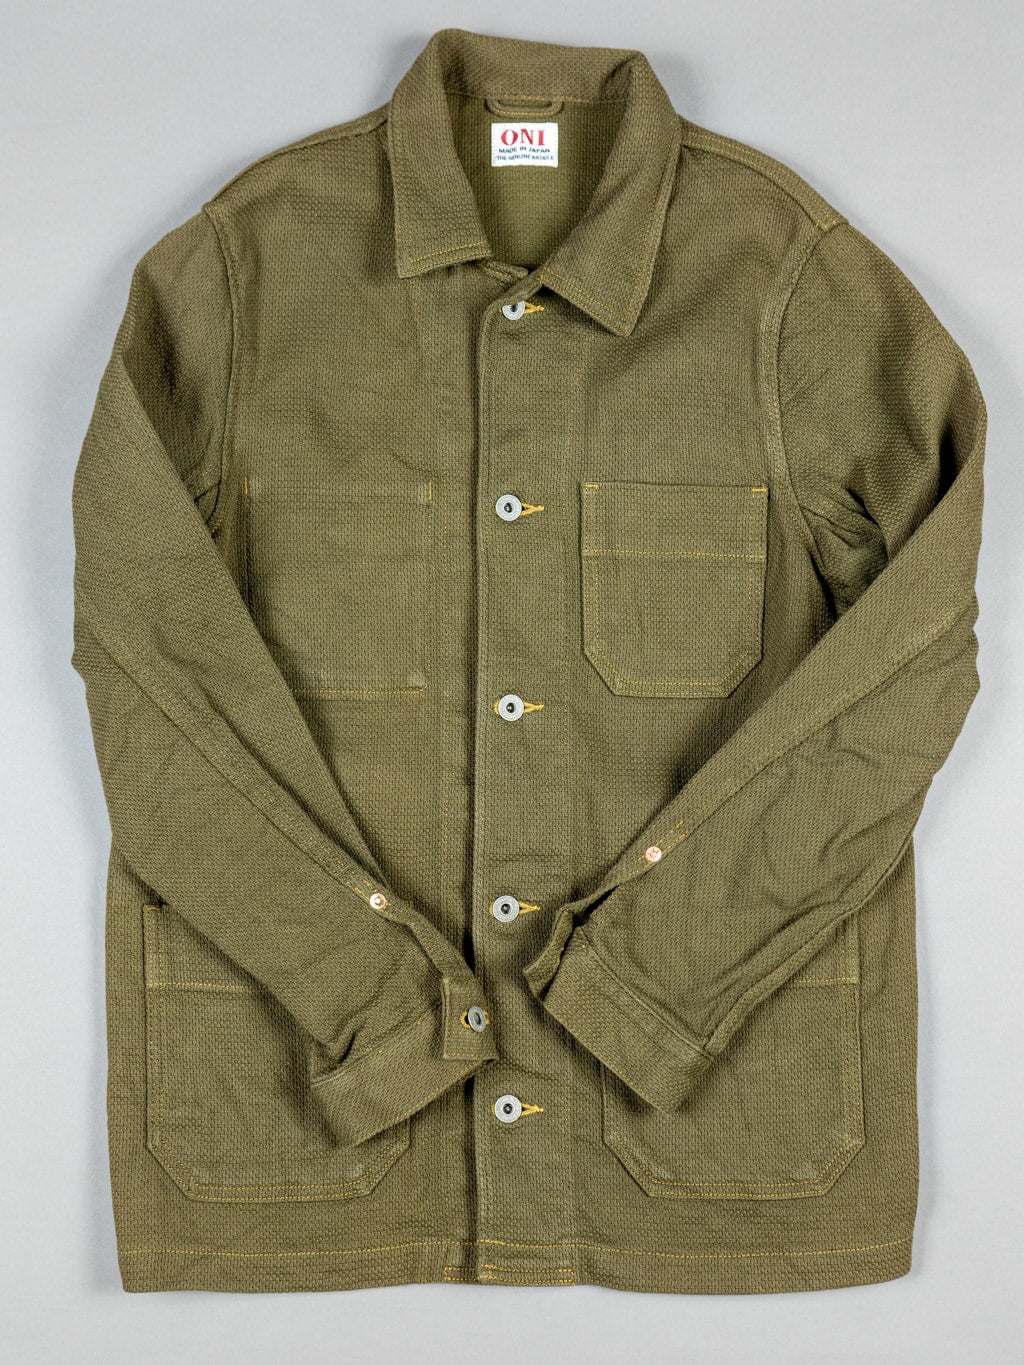 ONI Denim Sashiko Dobby Coverall Jacket Olive Drab Front